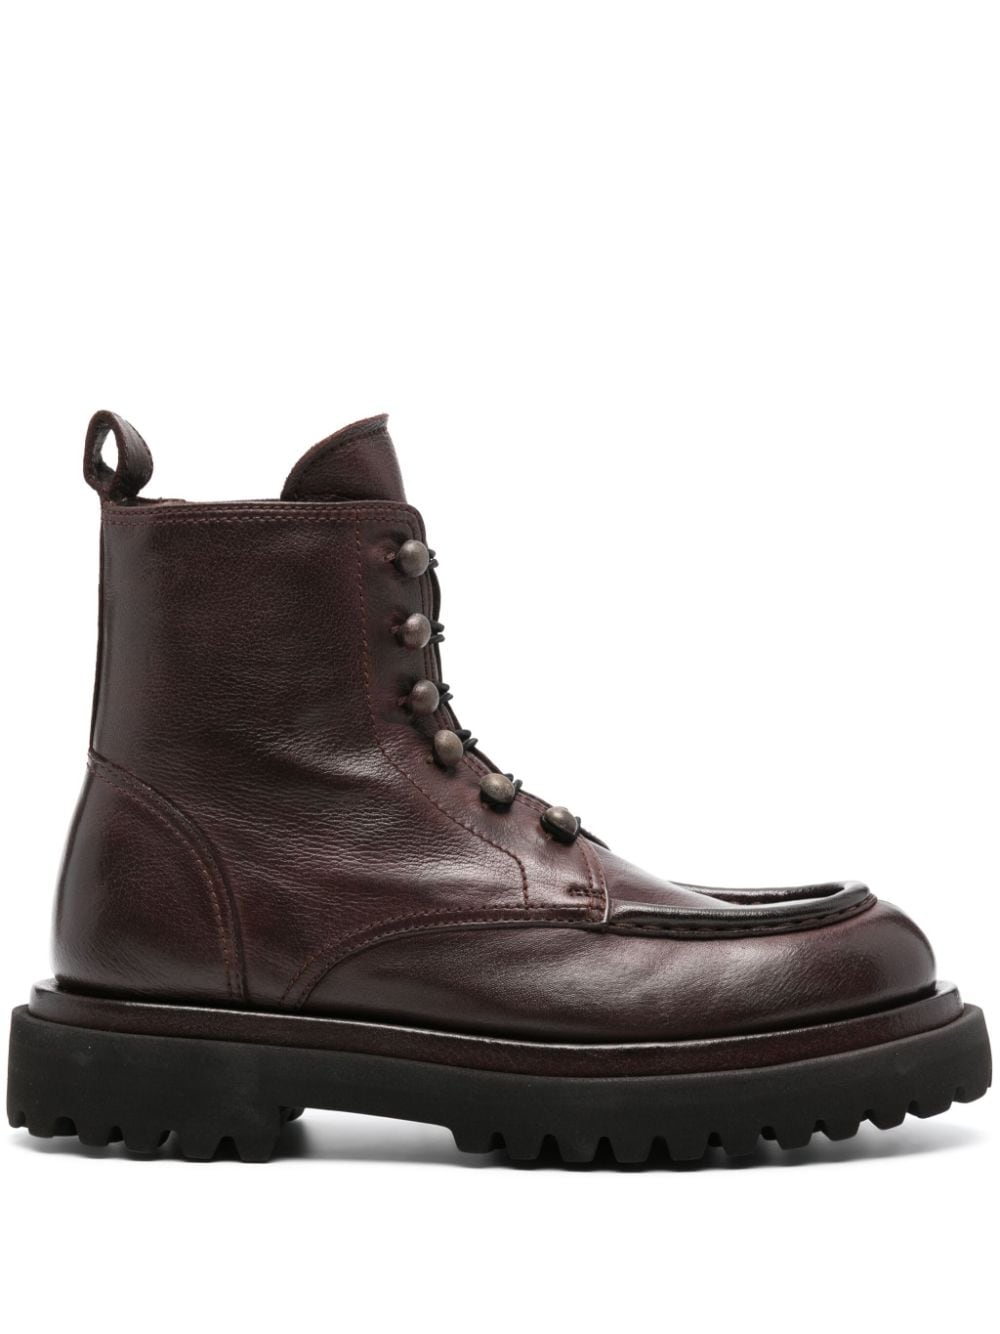 Officine Creative Wisal DD 103 lace-up leather boots - Brown von Officine Creative